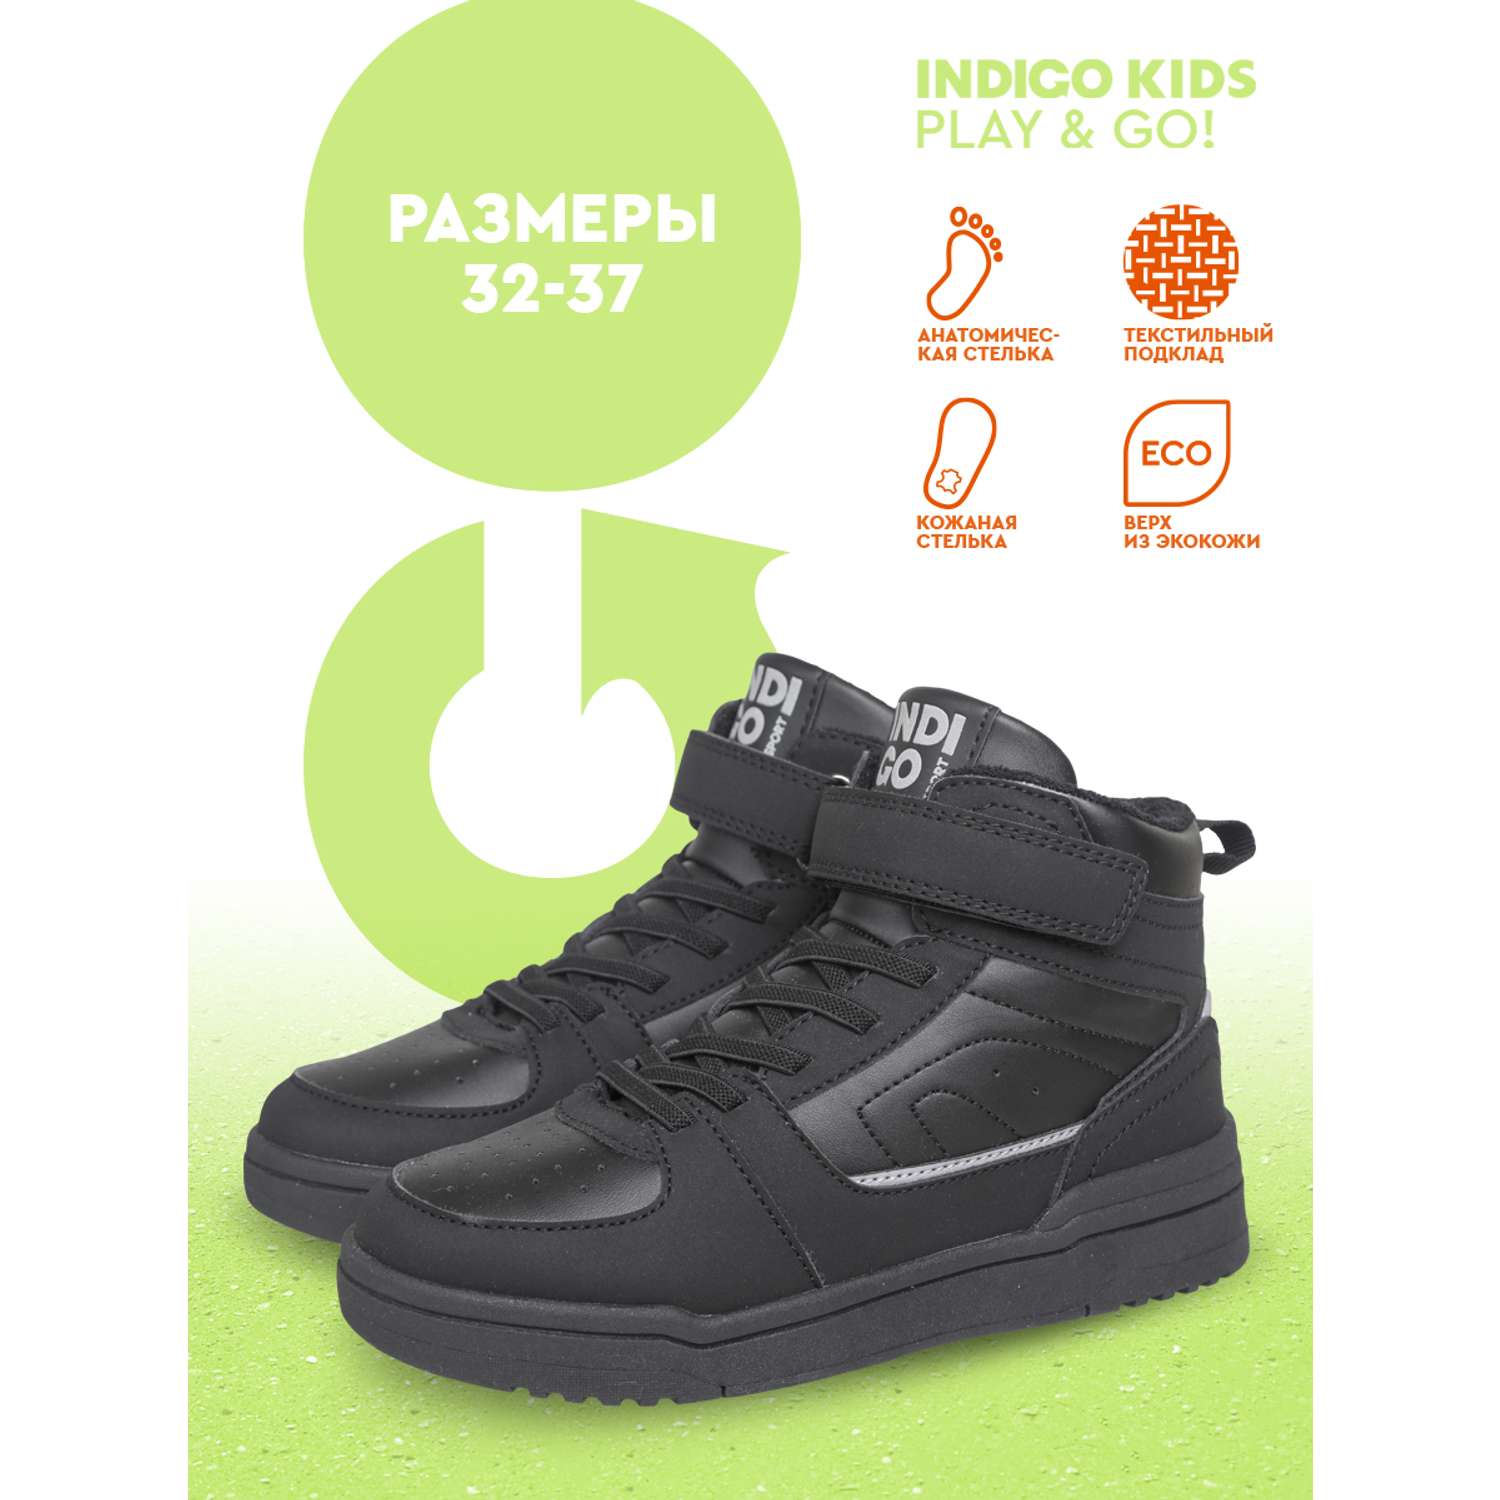 Ботинки Indigo kids 53-010C - фото 7